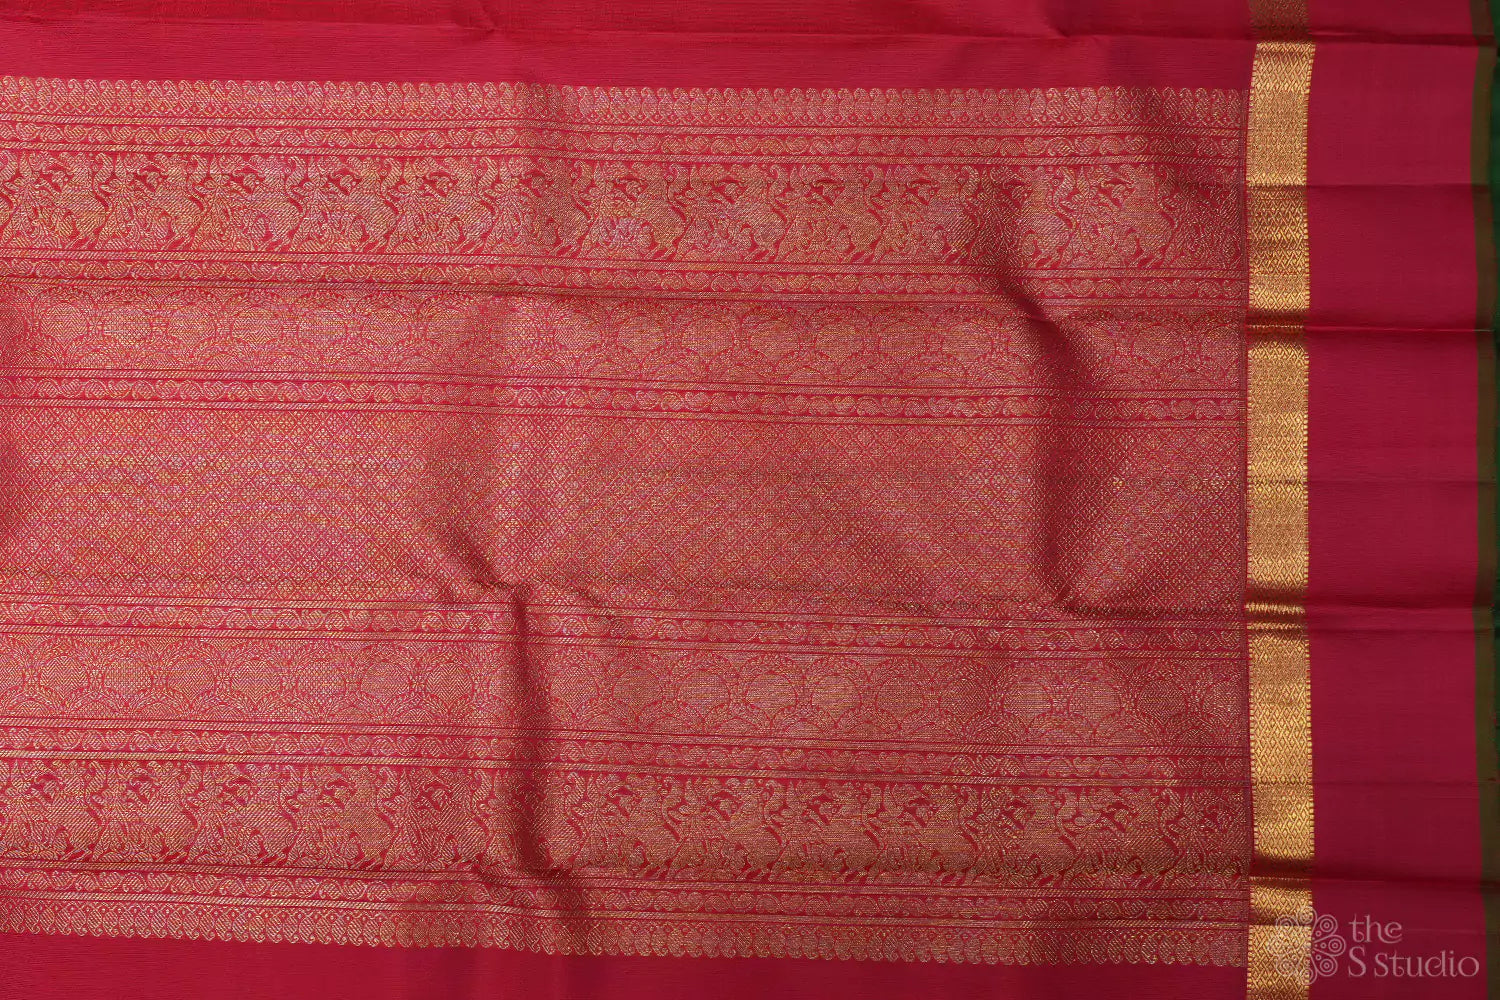 Red kanchipuram bridal silk saree